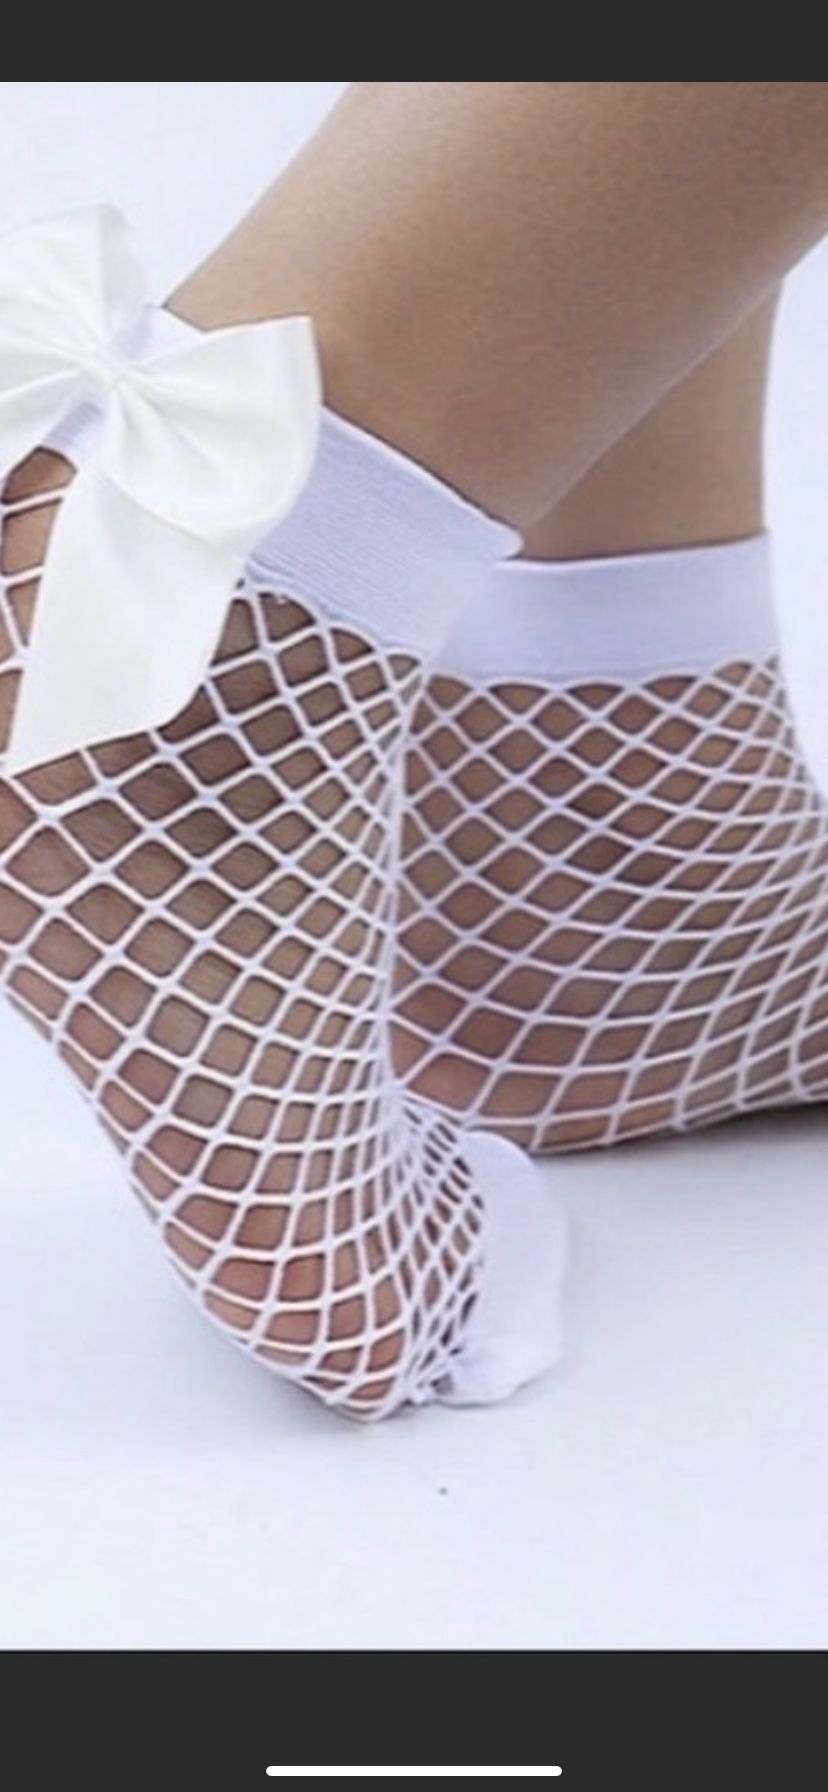 Super cute white fishnet socks